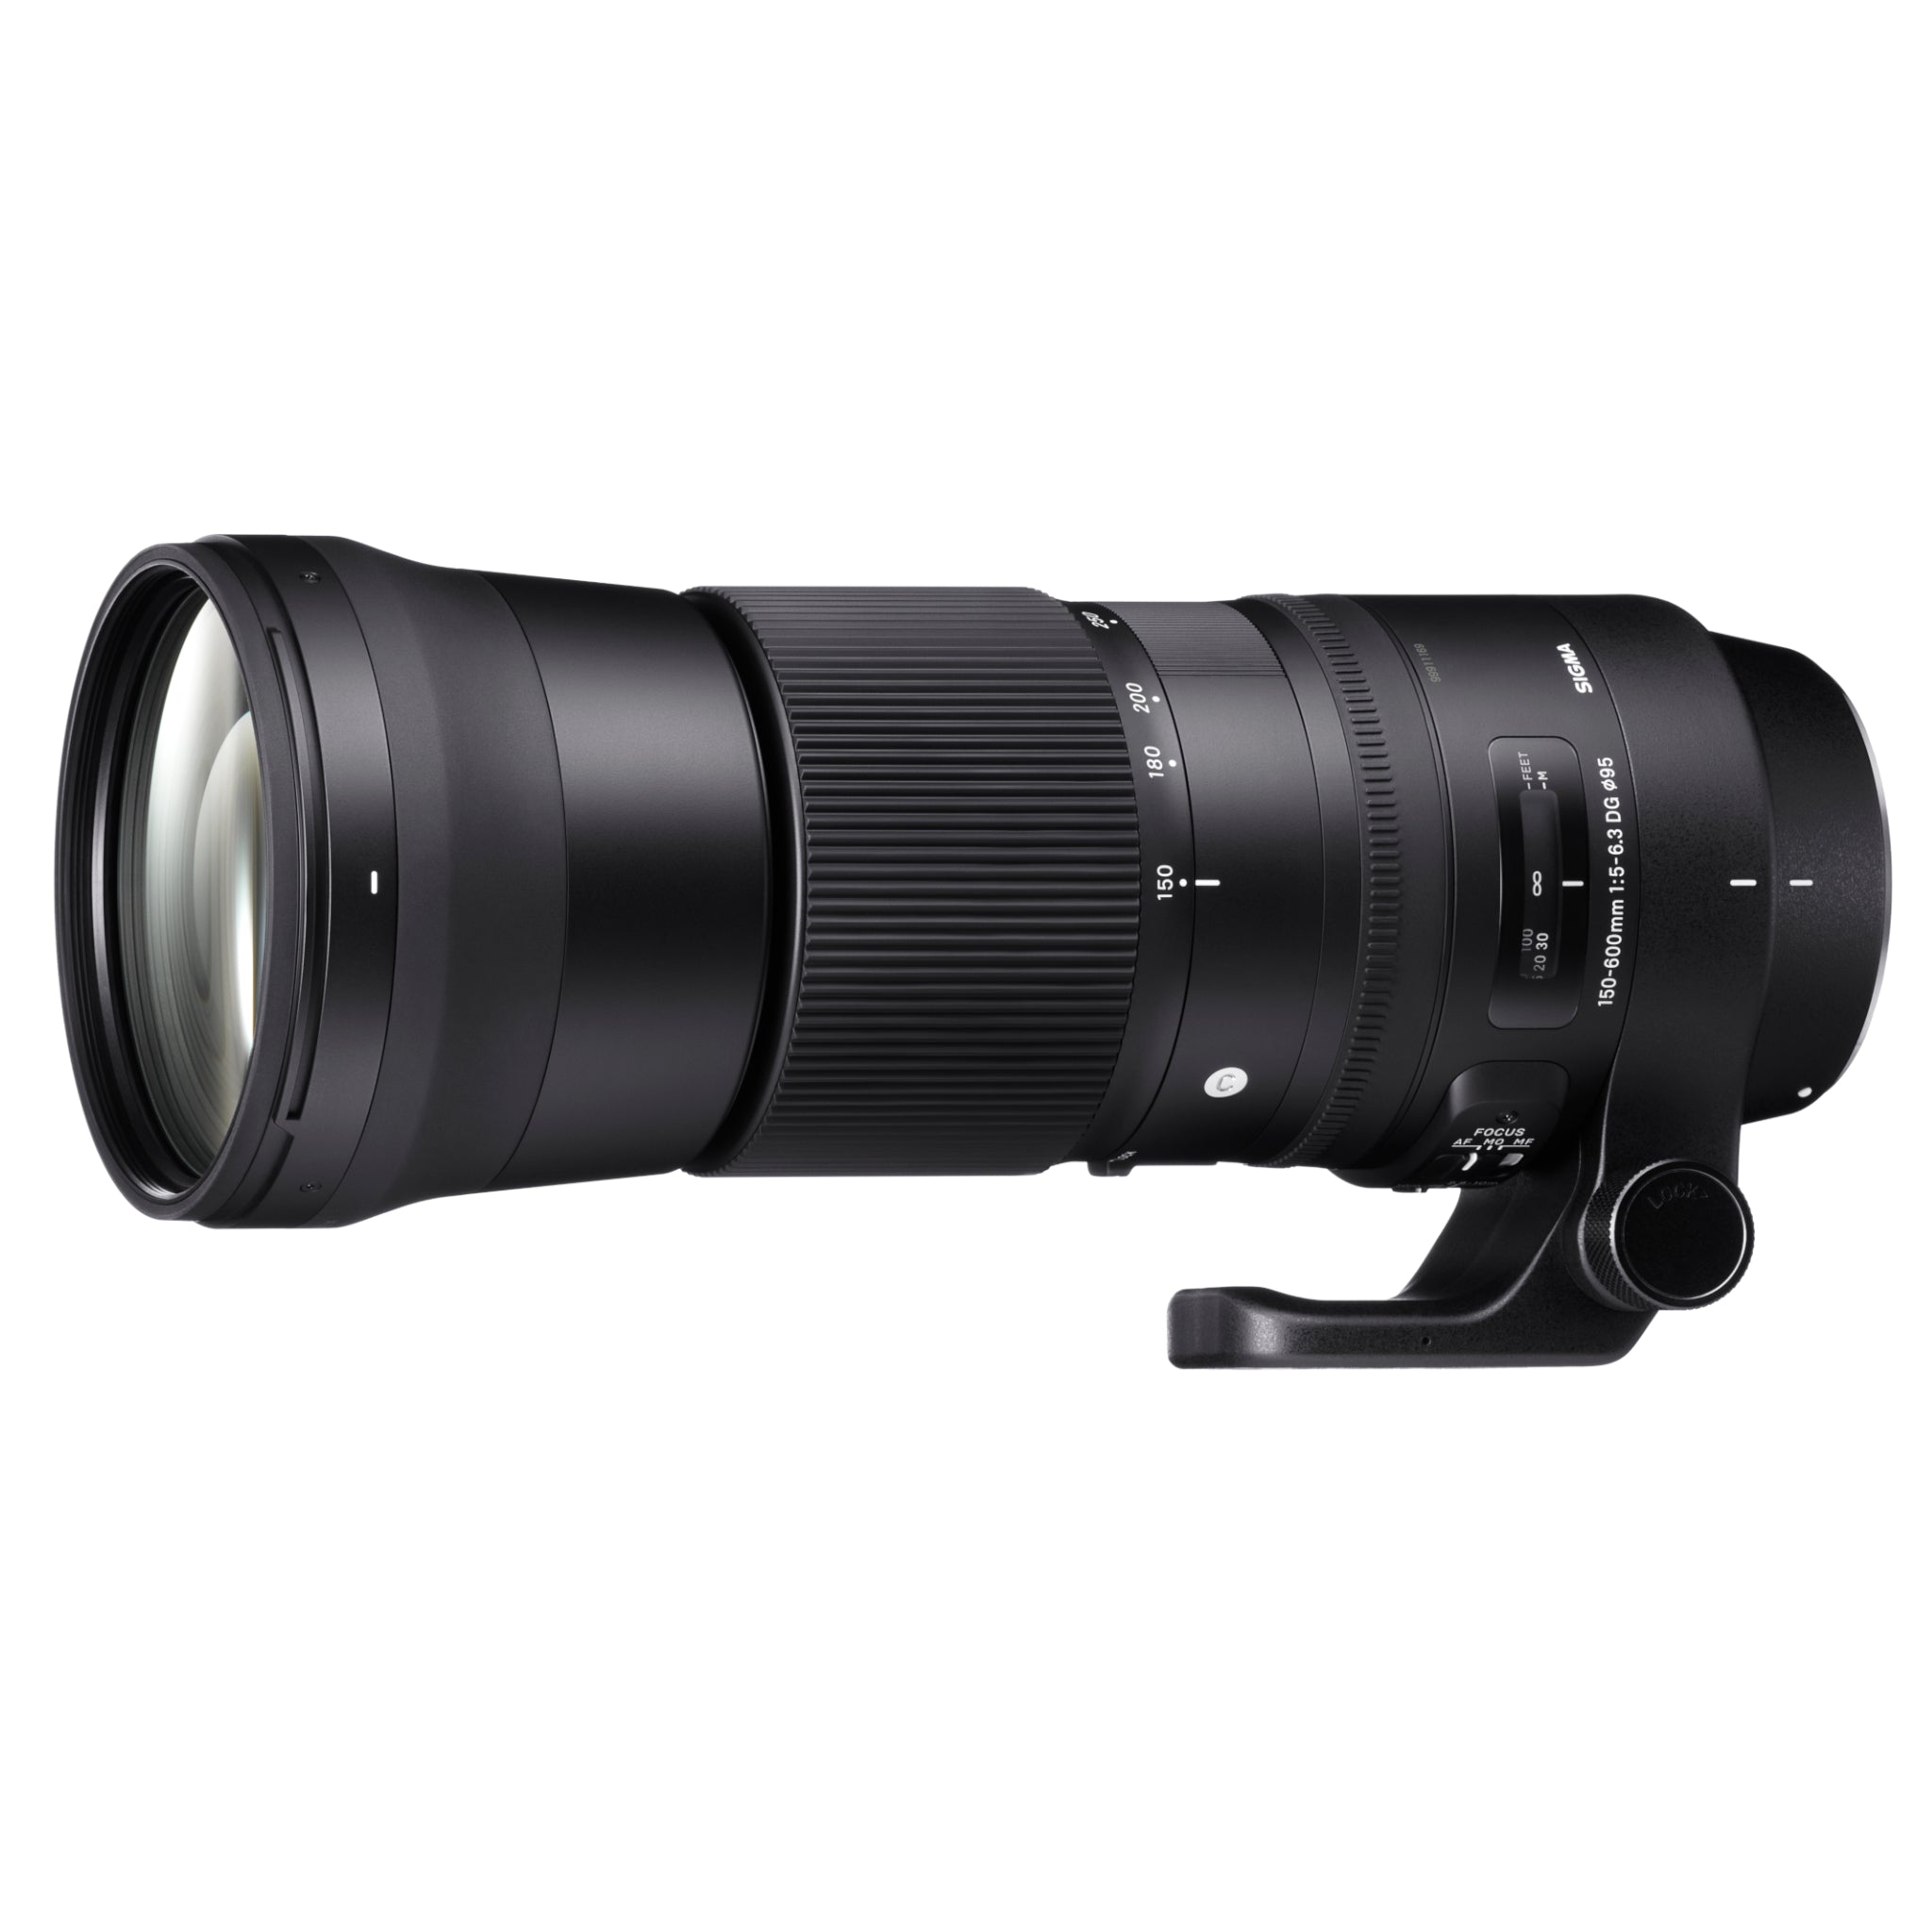 Sigma 150-600mm f5-6.3 DG OS HSM lens